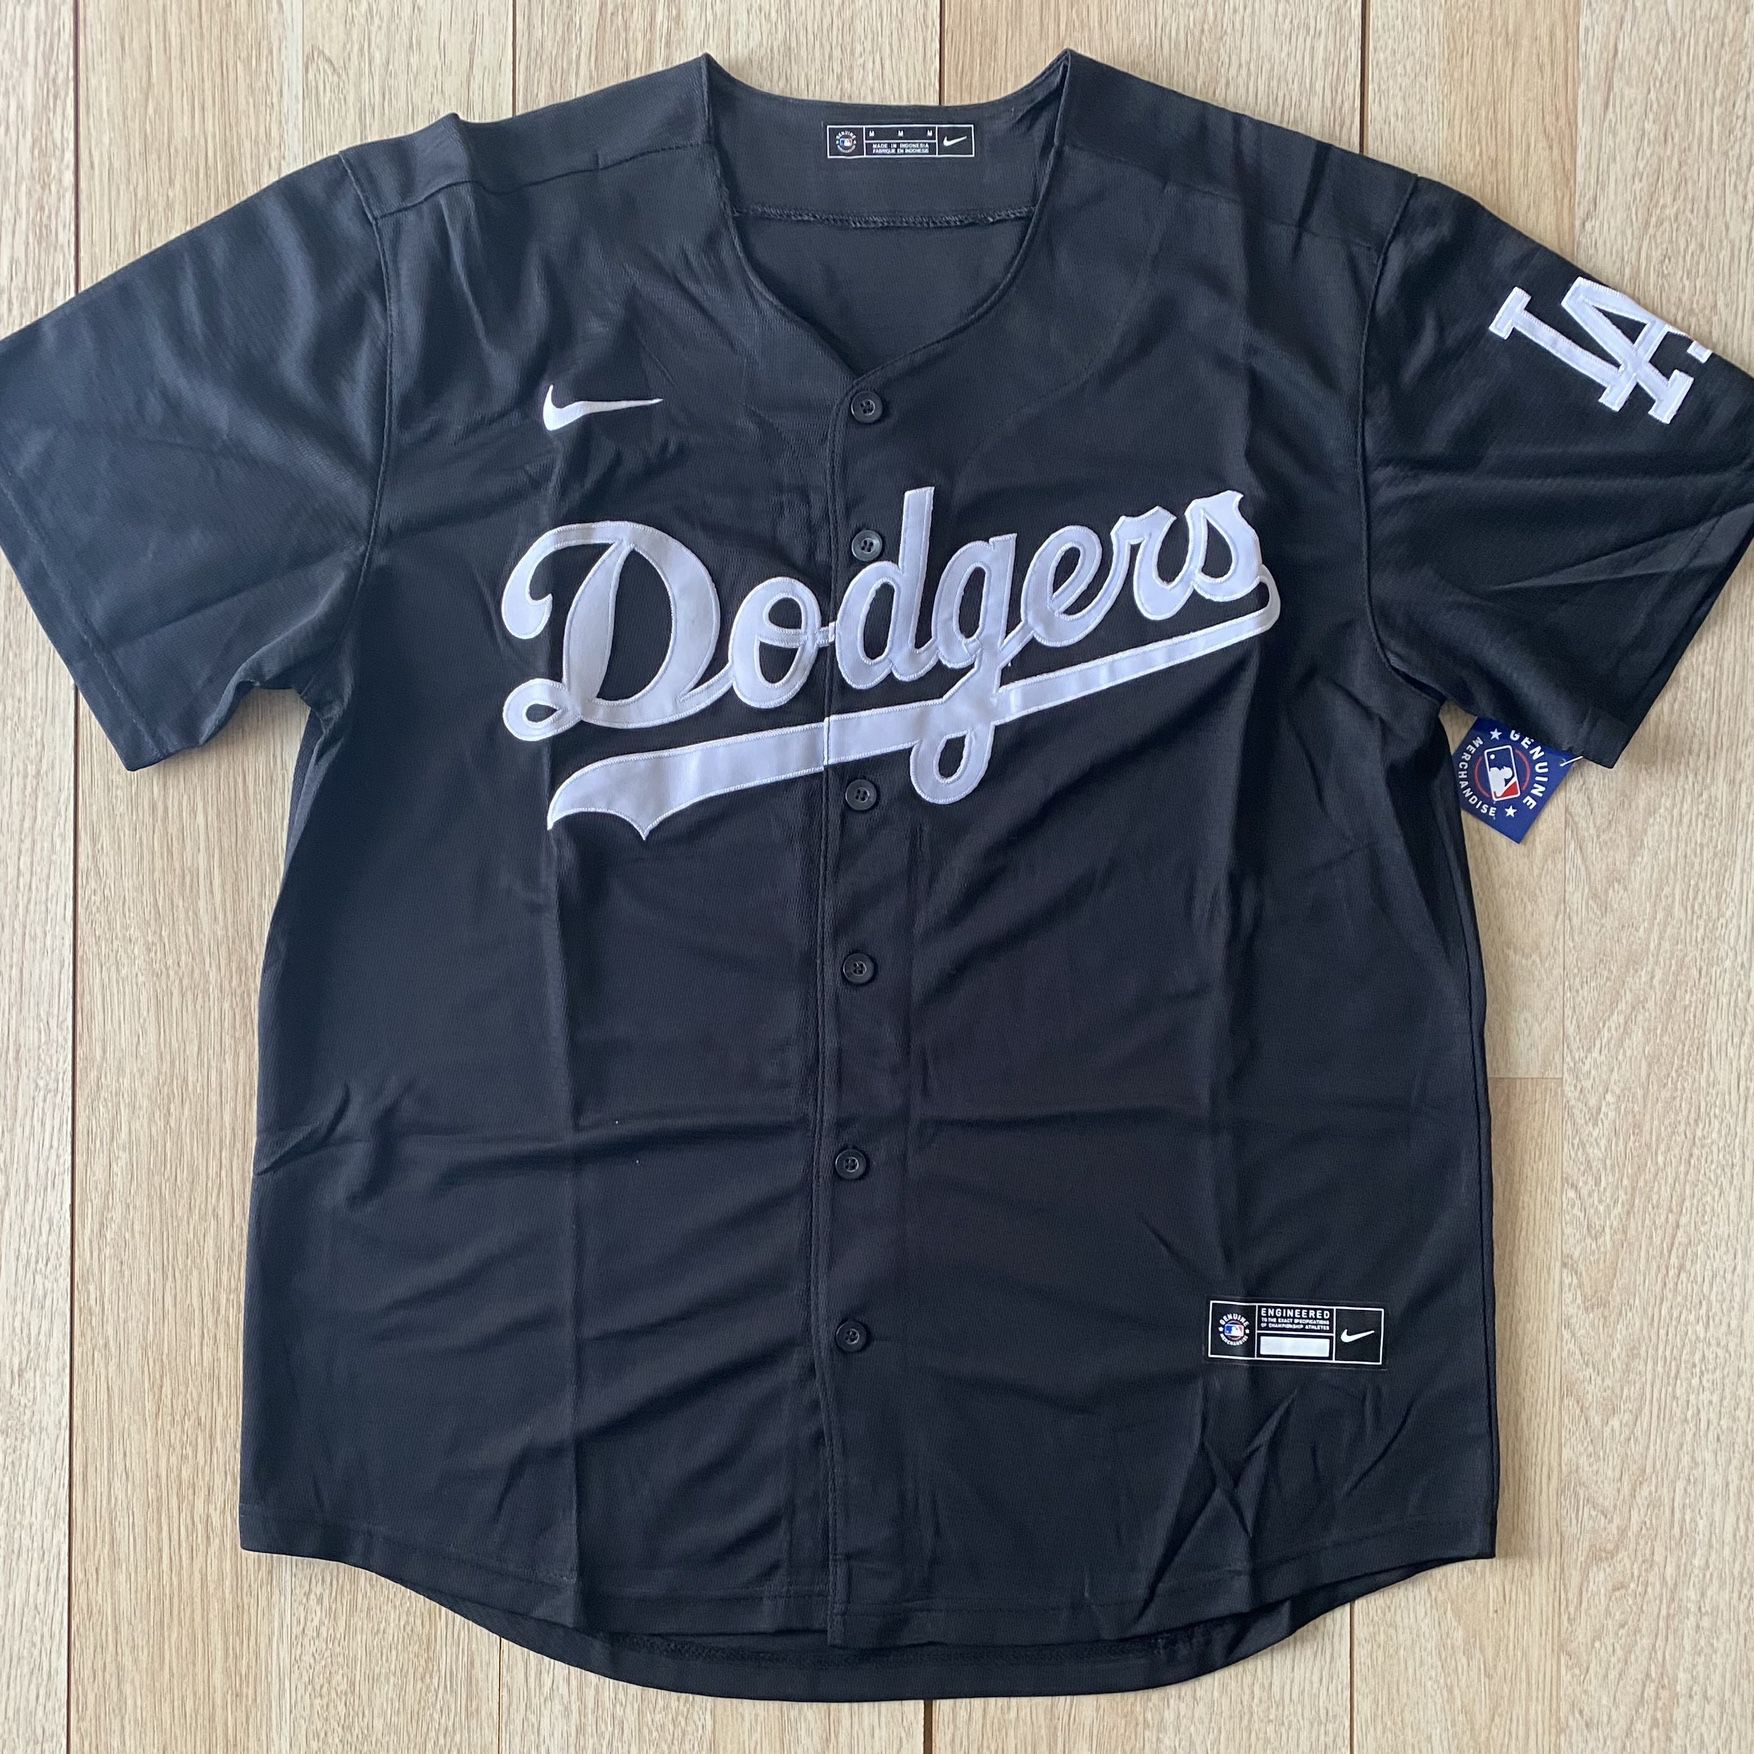 LA Dodgers Pride Jersey - XL for Sale in Downey, CA - OfferUp